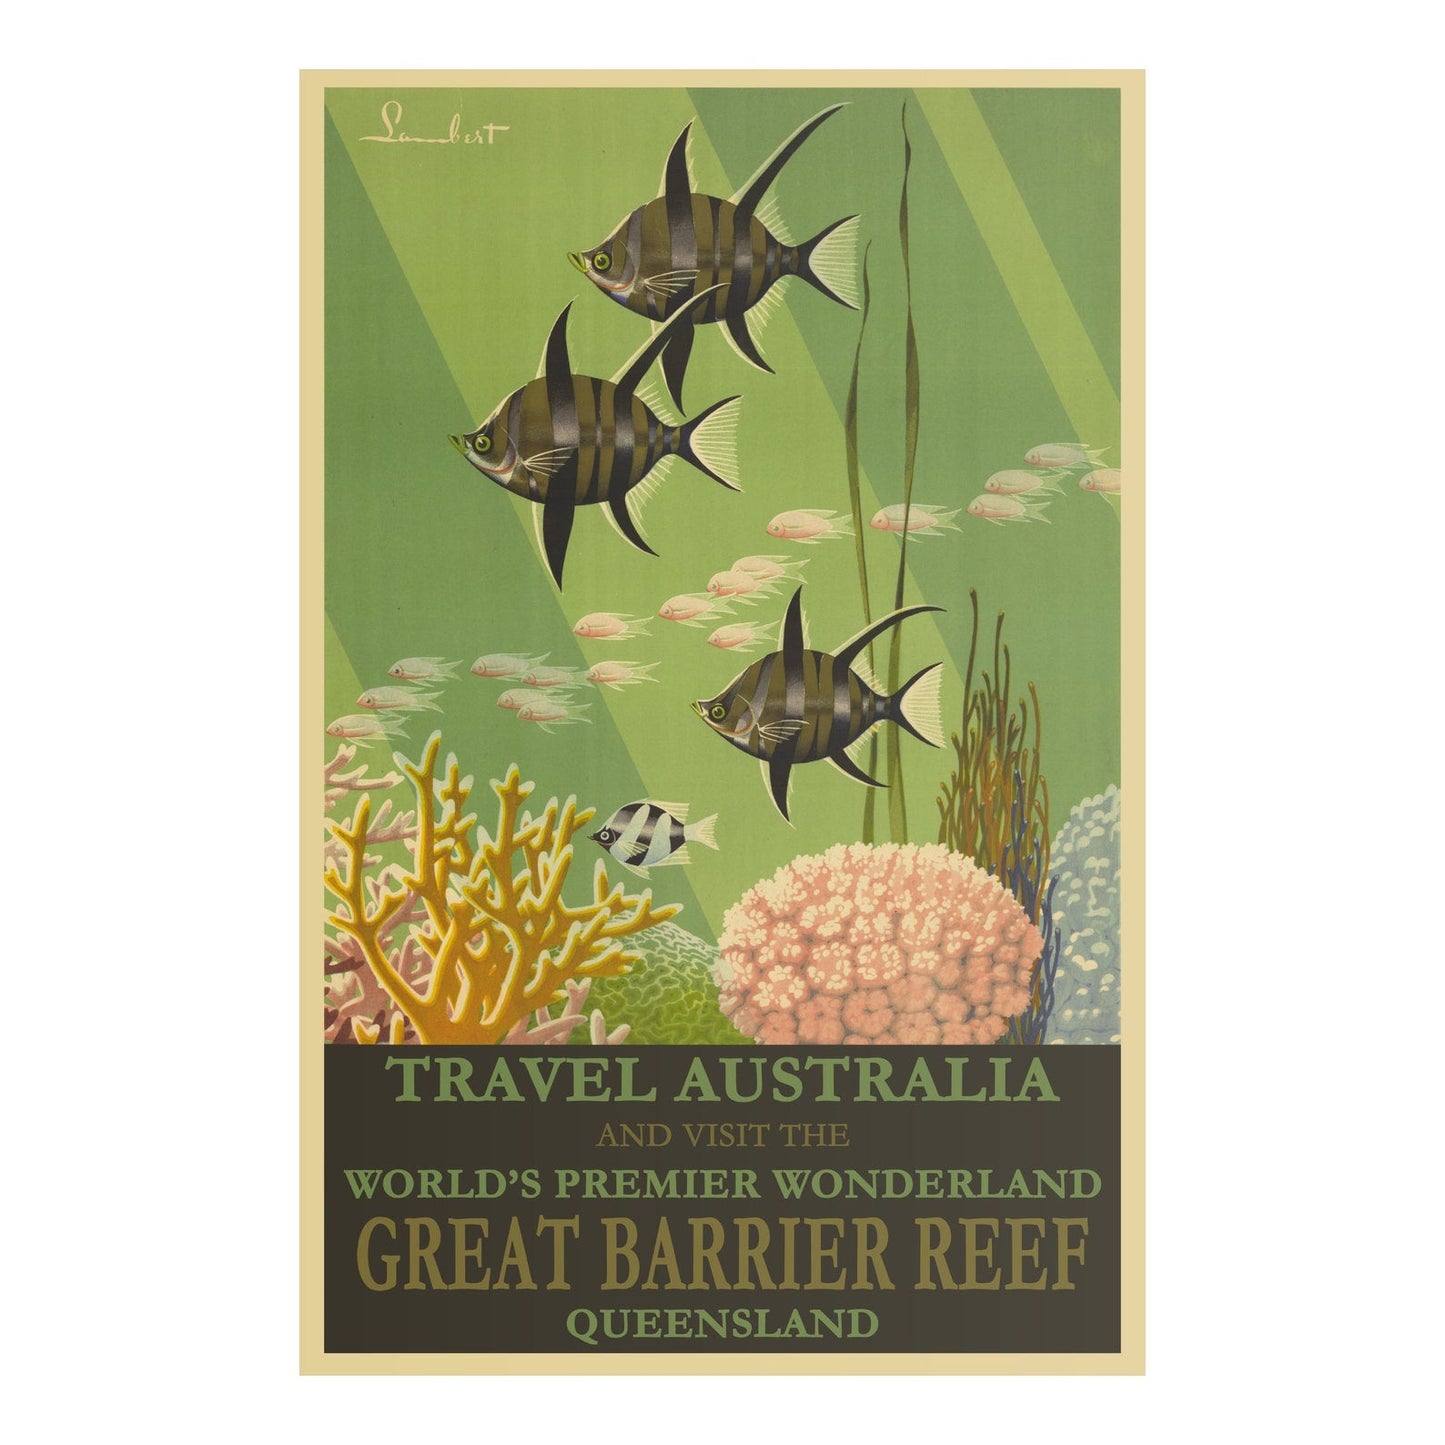 Great Barrier Reef - Vintages Australien-Reiseplakat